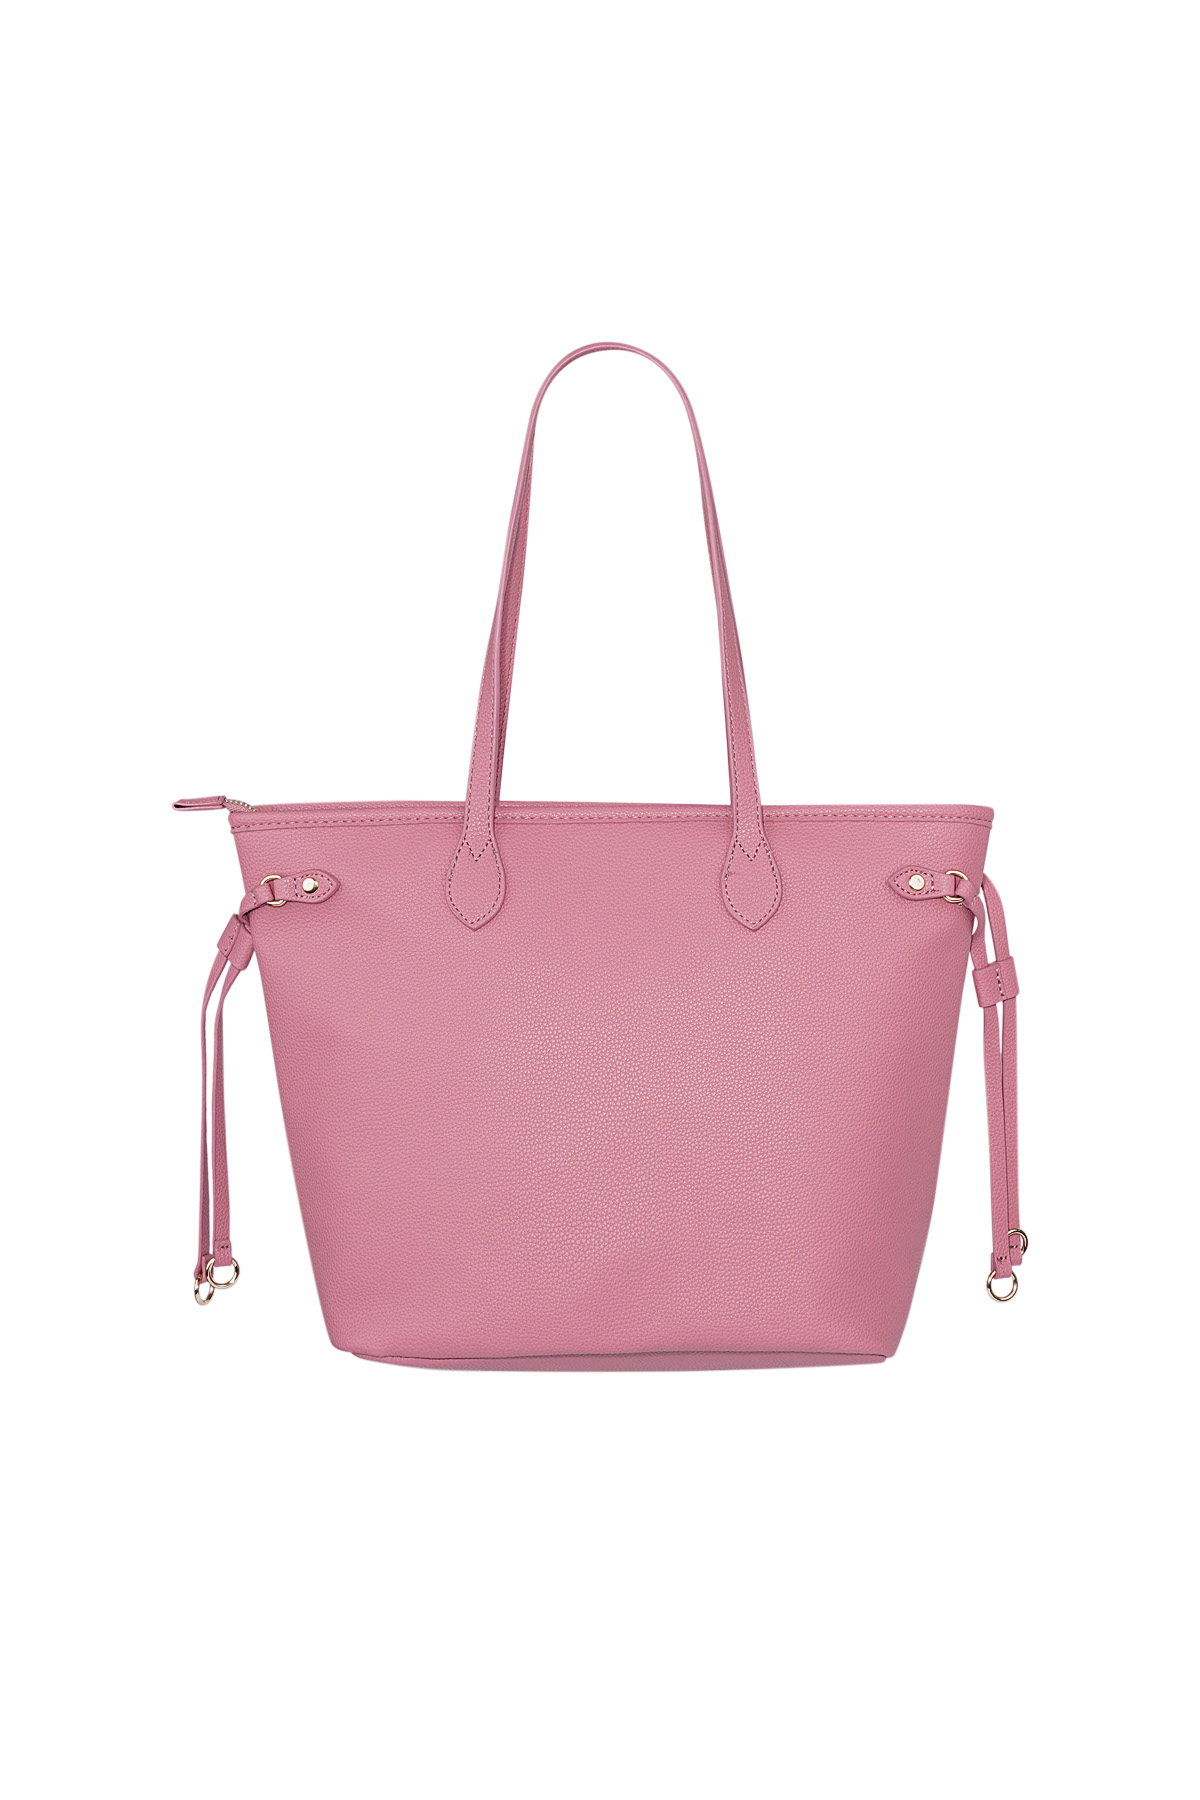 Handbag with straps - rose